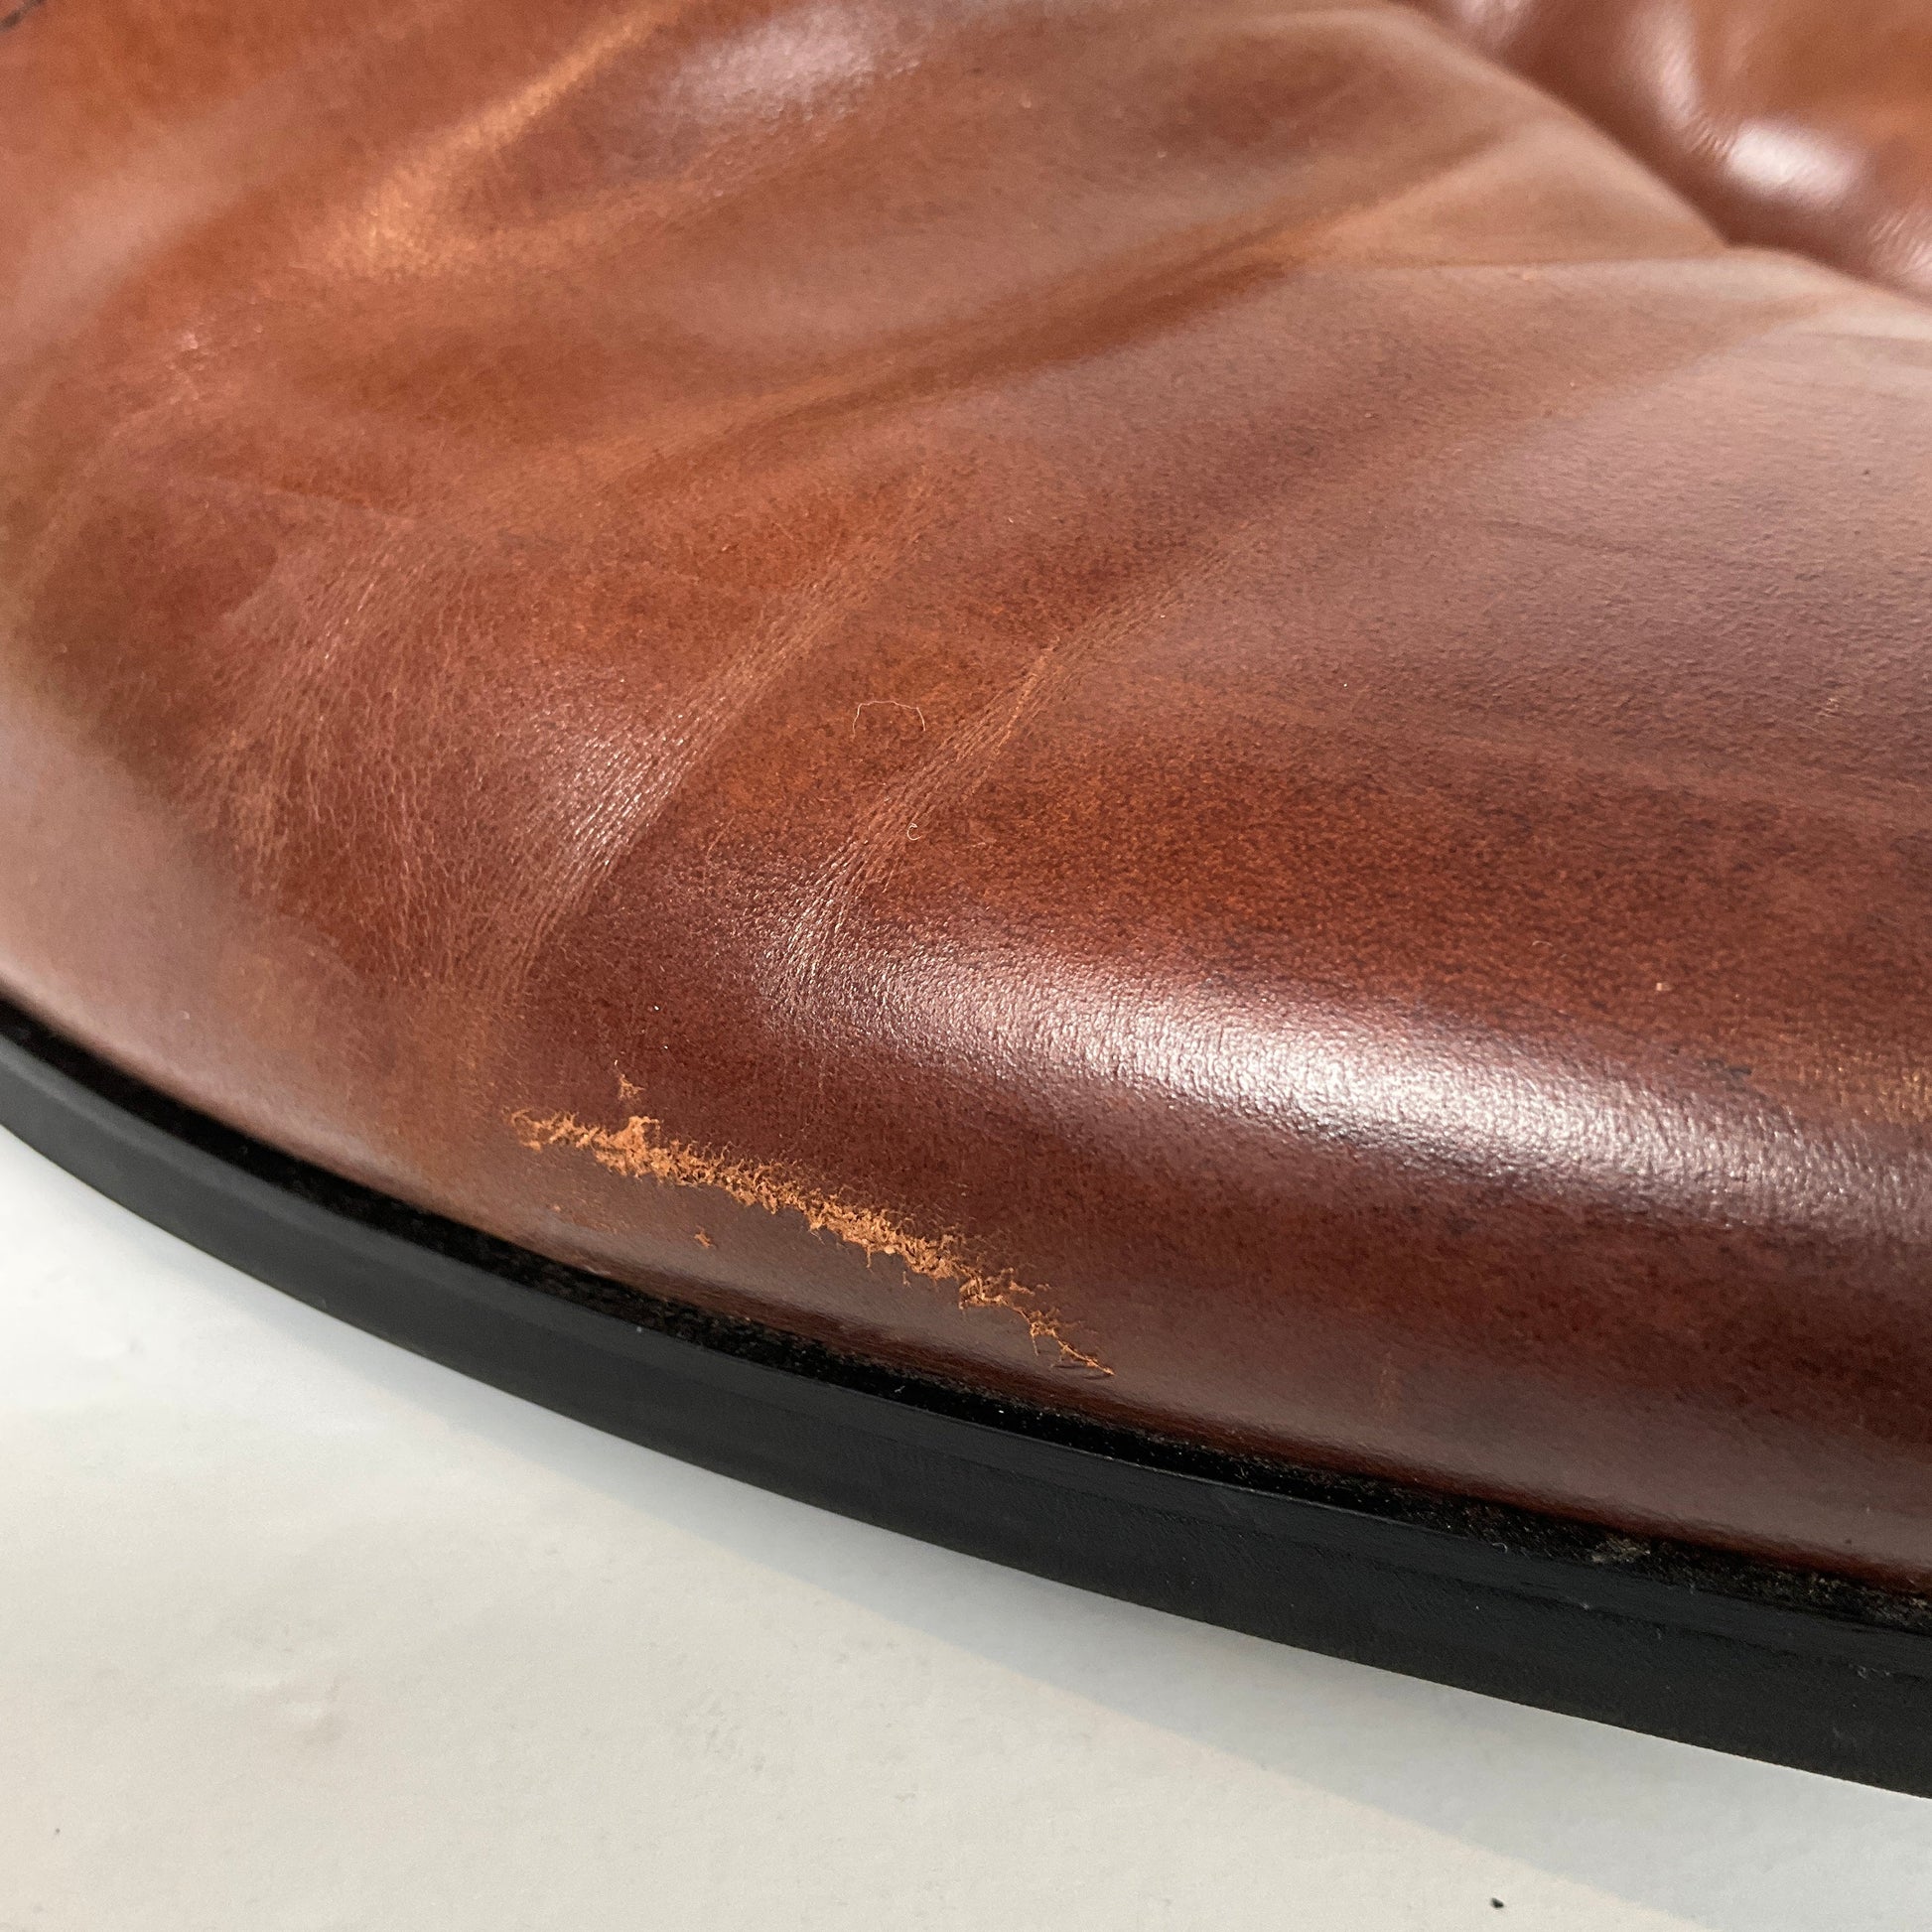 Florsheim - Leather Boots Size 9 Shoes